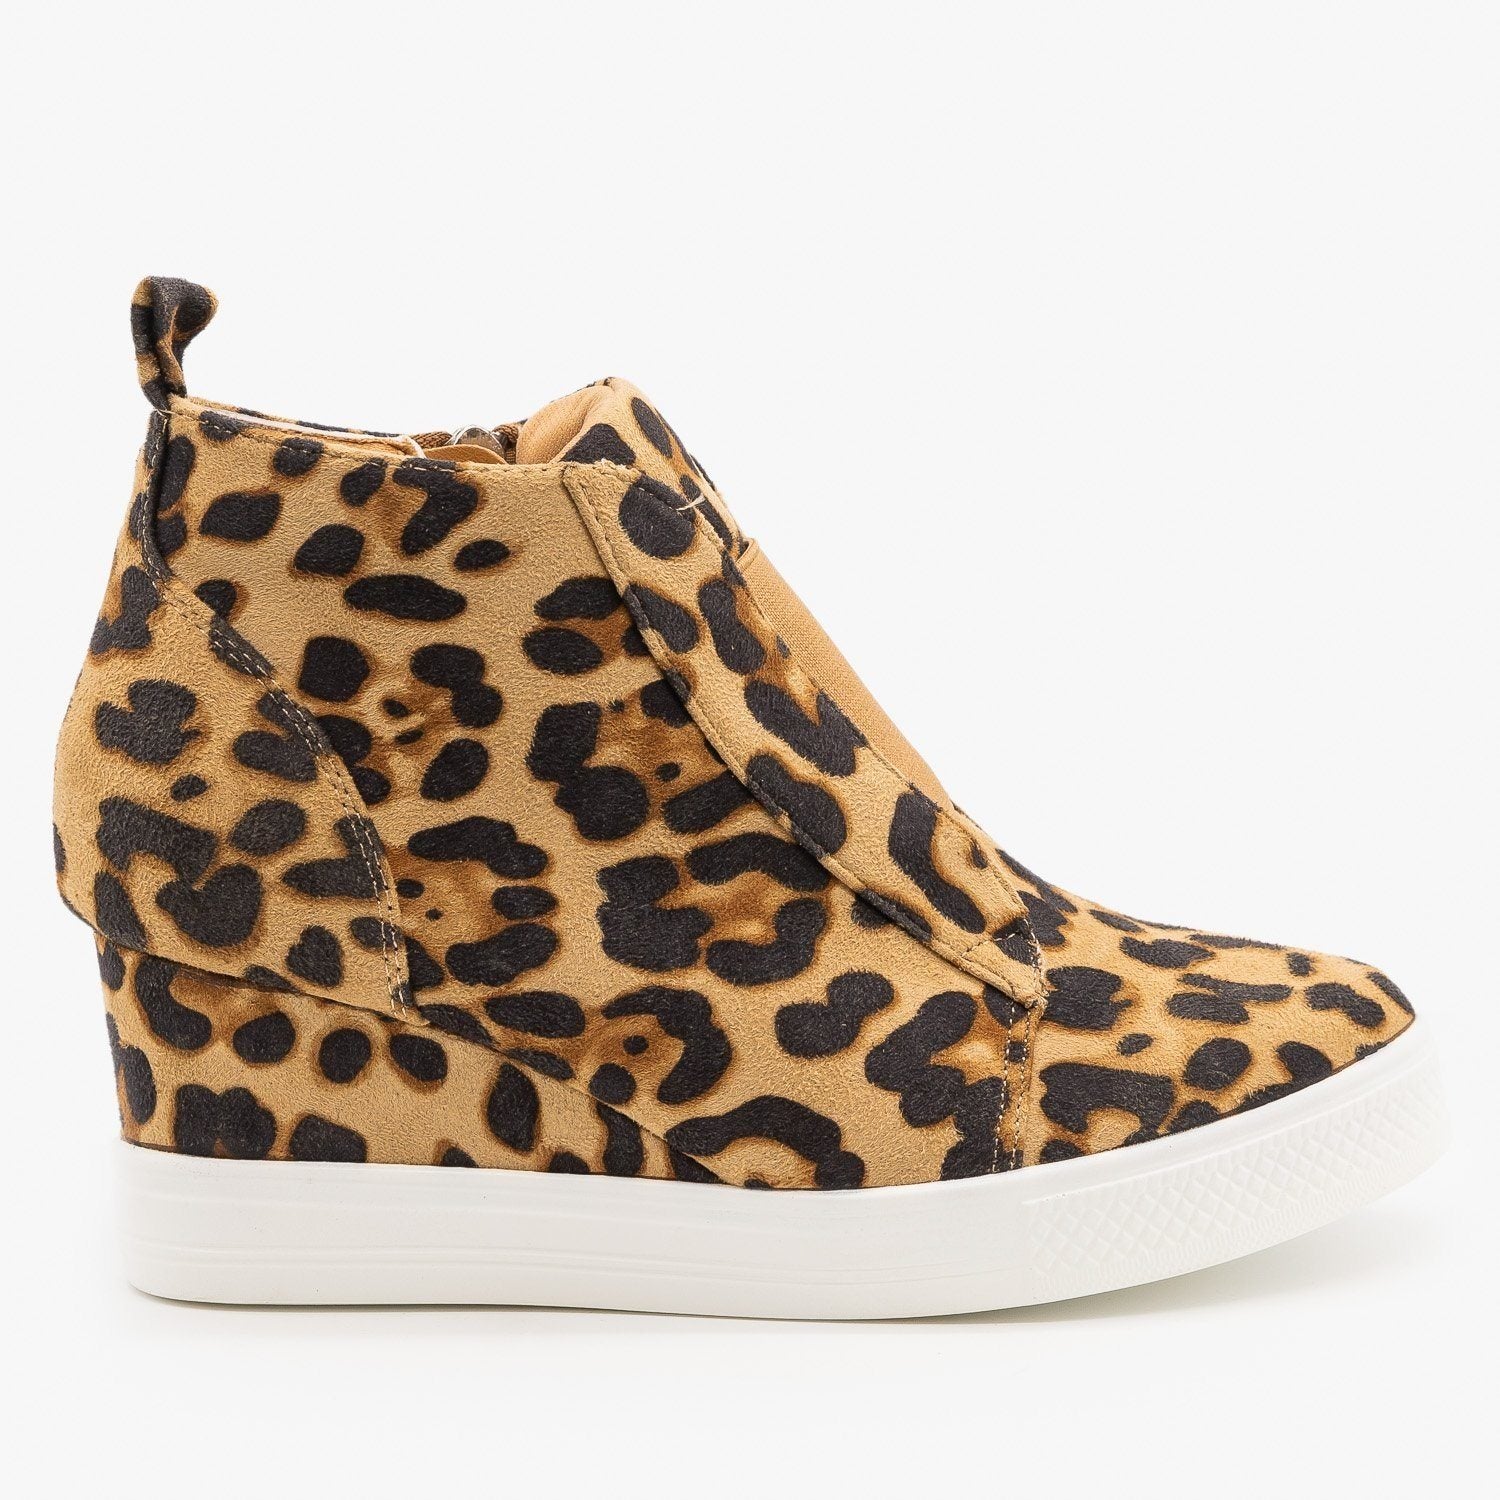 Leopard Sneaker Wedges - CCOCCI Shoes 